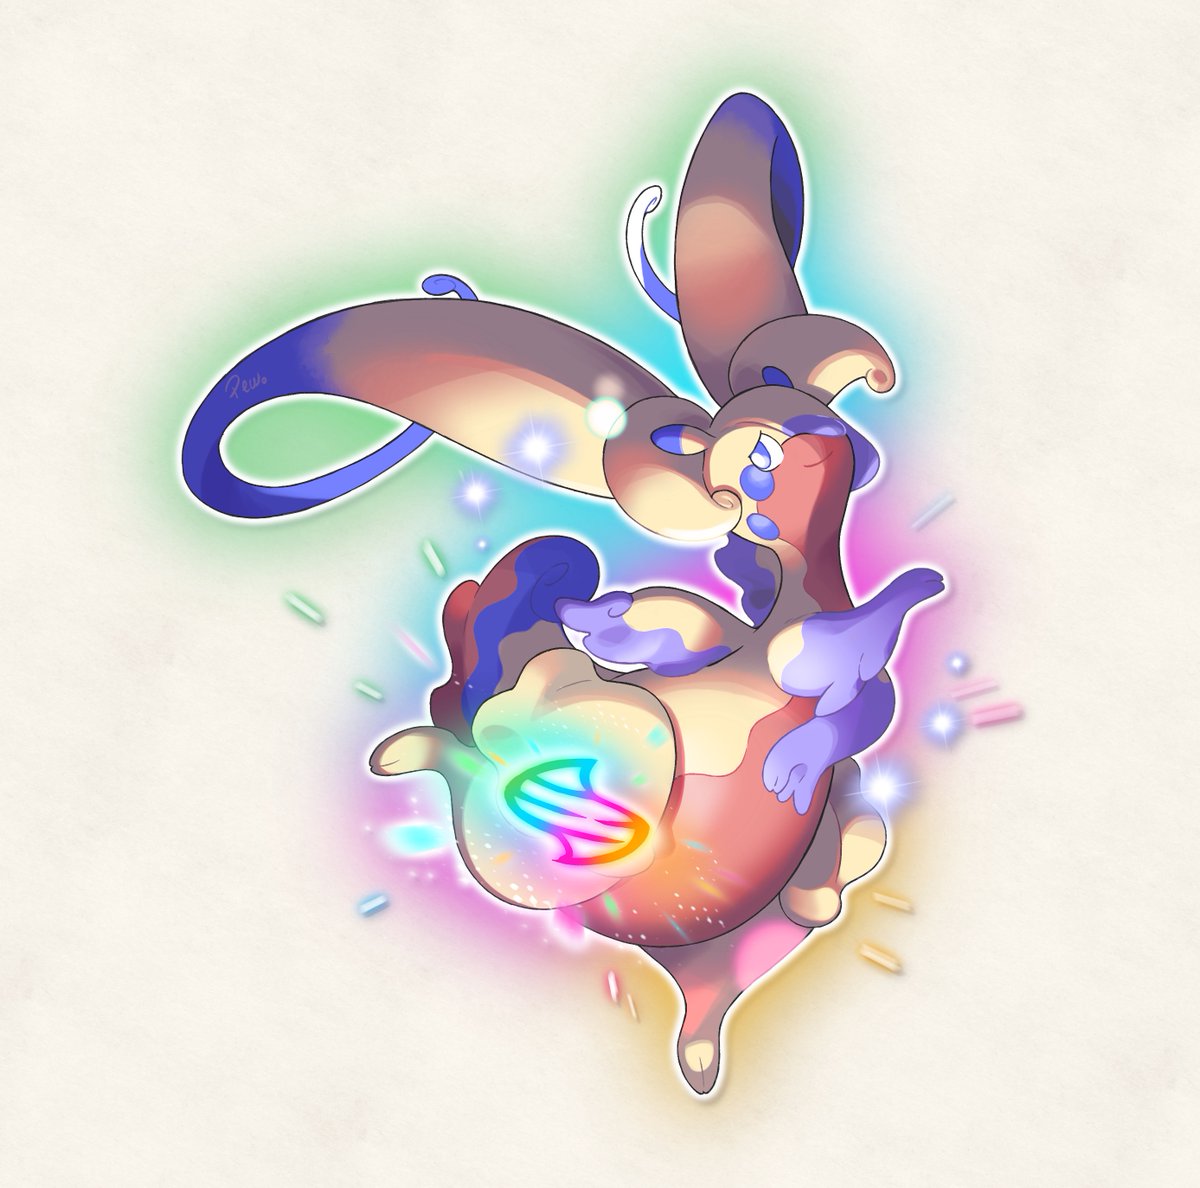 Shiny mega goodra✨💫

I wanted to draw him as if it was a event promo art!
#PokemonLegendsZA